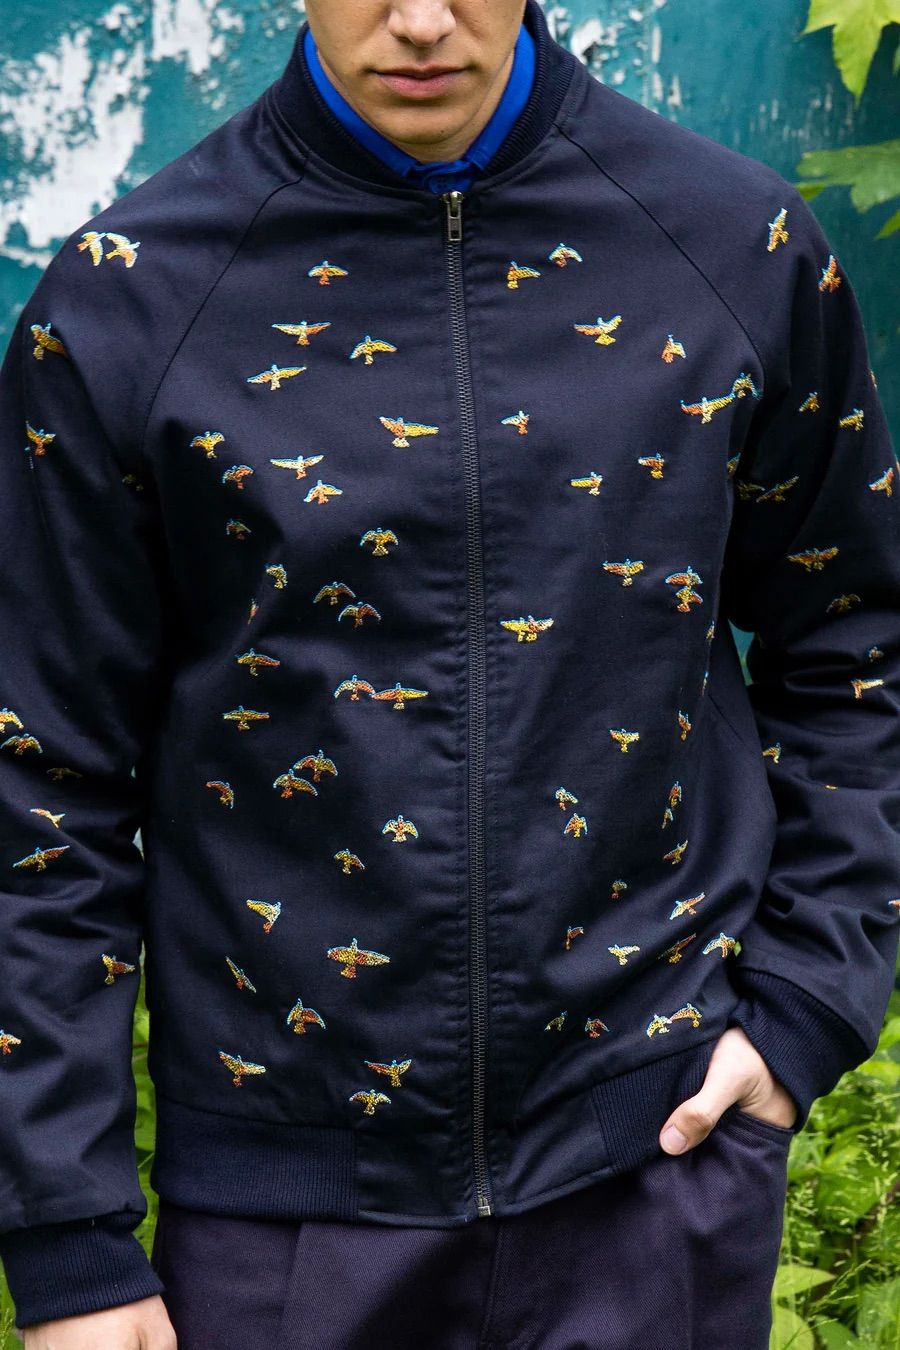 Teddy jacket with bird embroidery - Misericordia